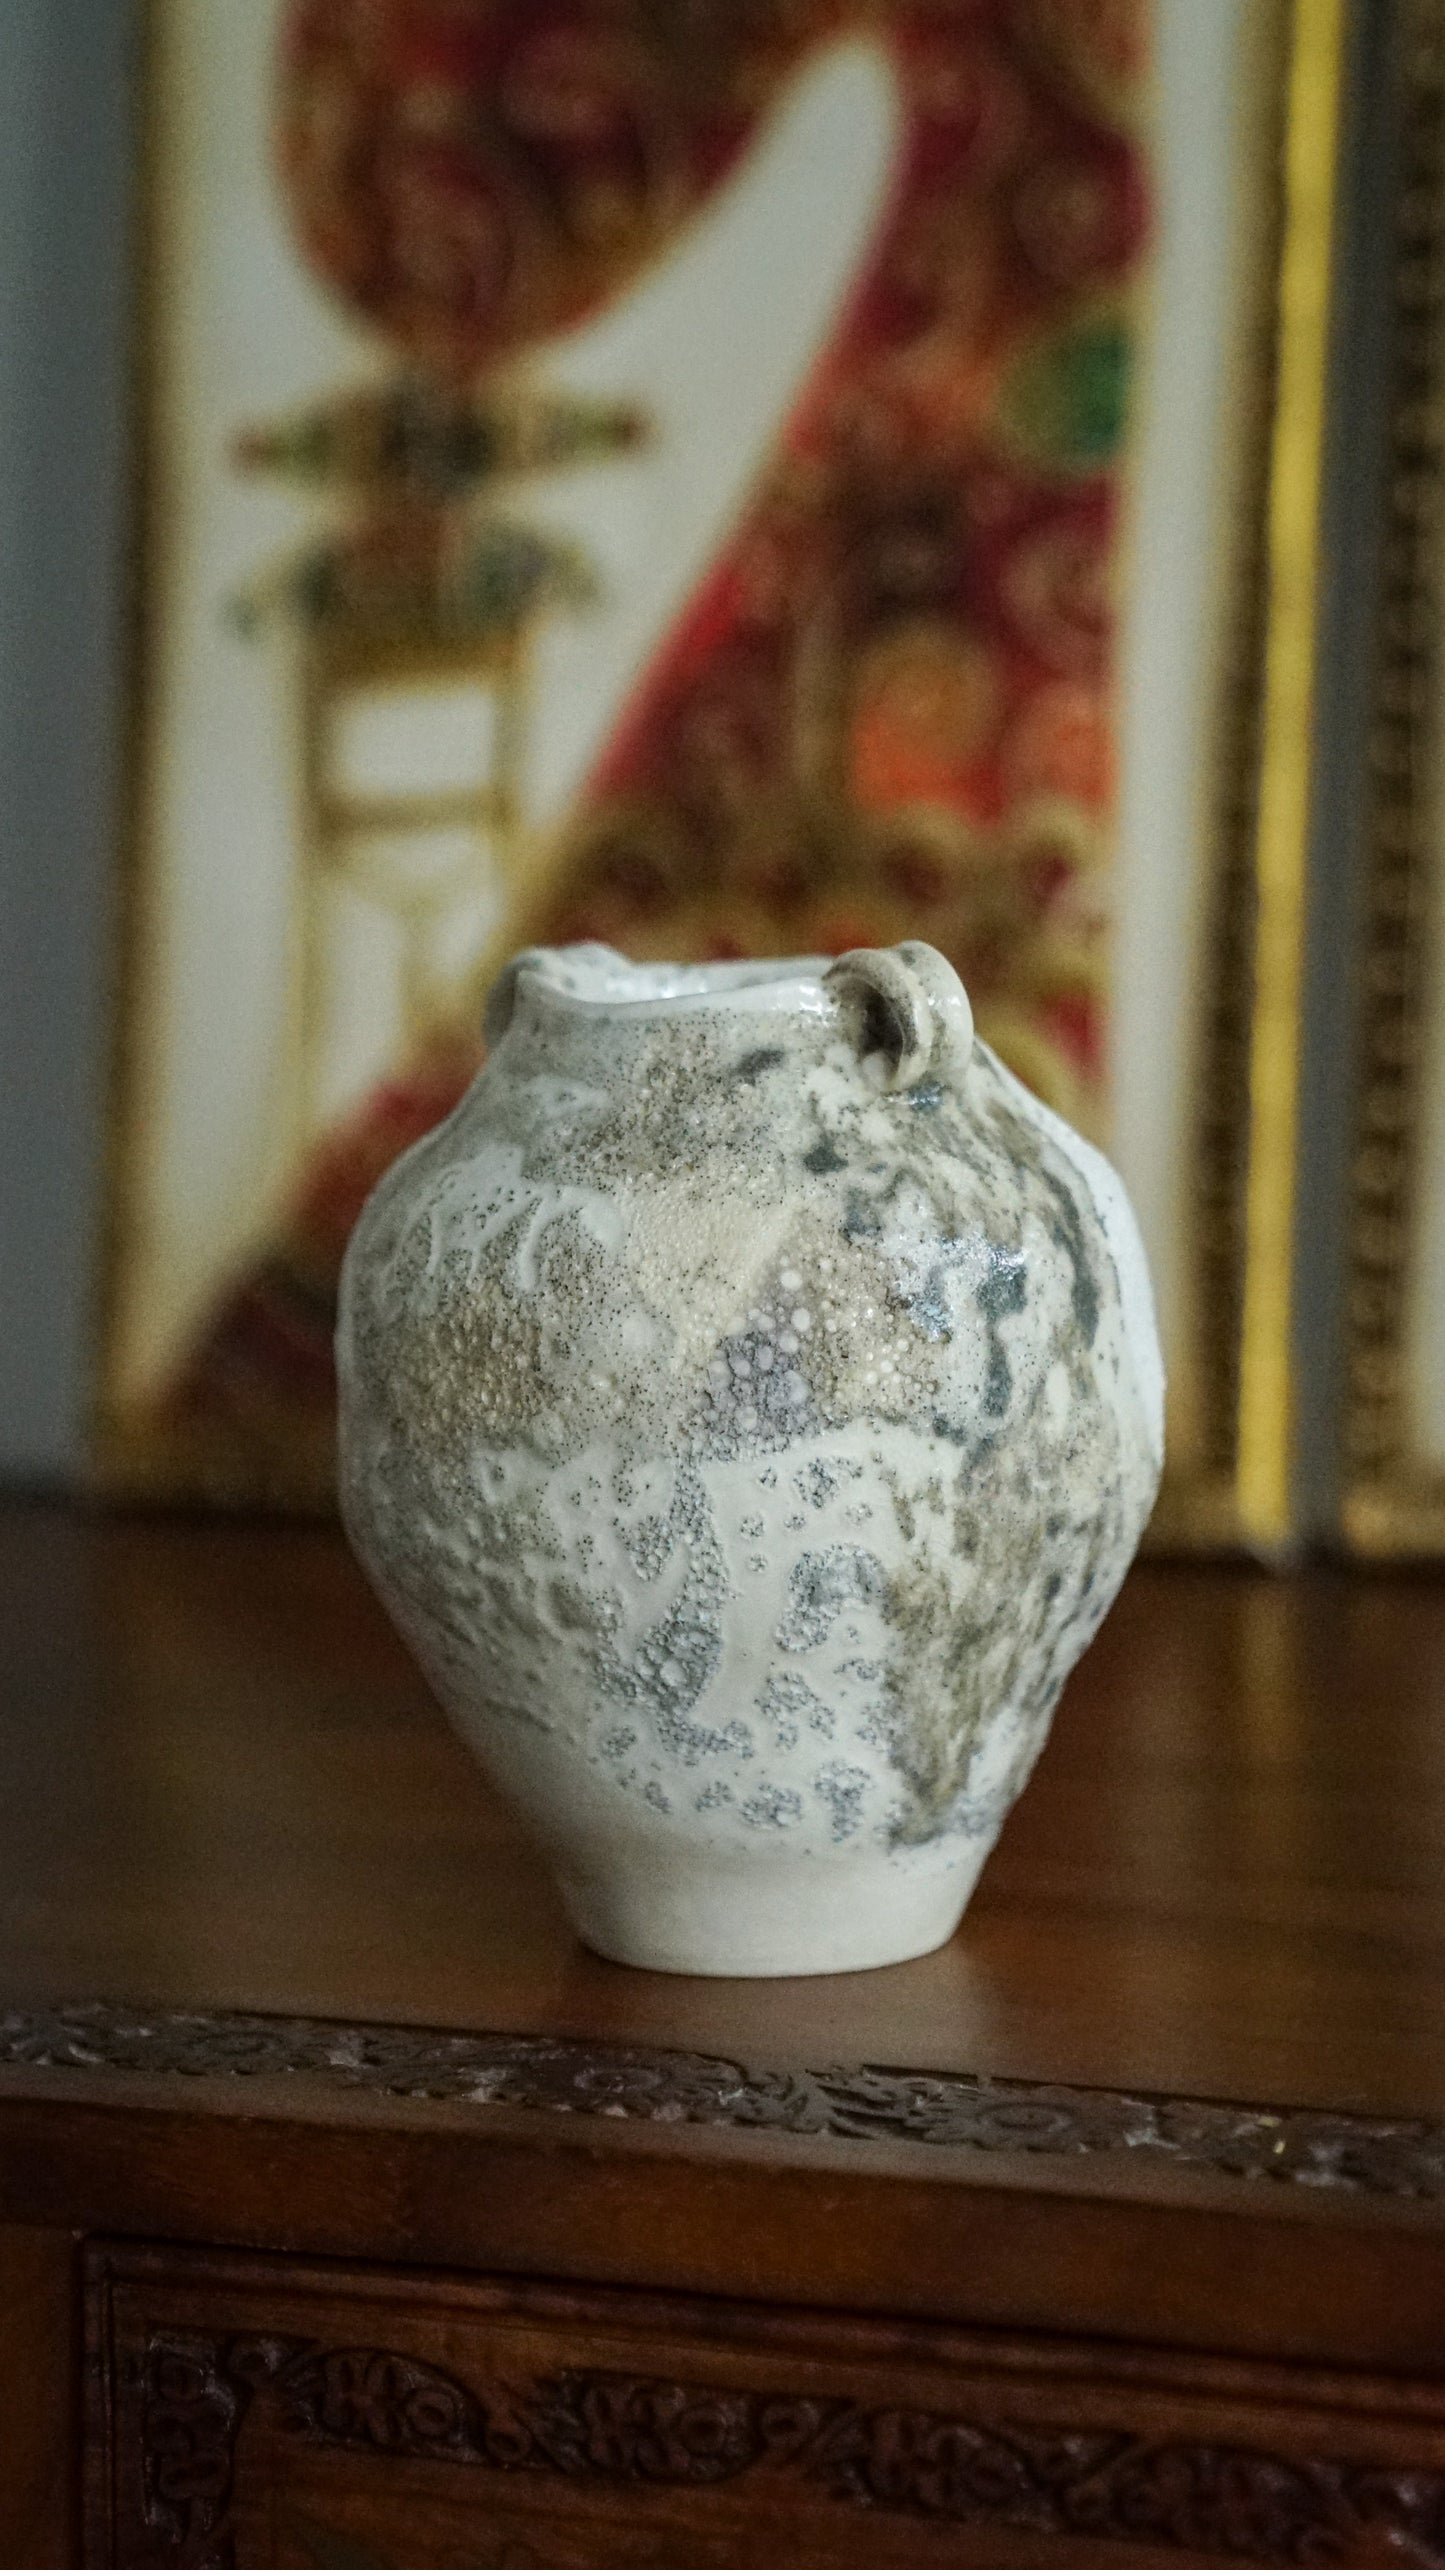 Impressions of a Landscape Vase III